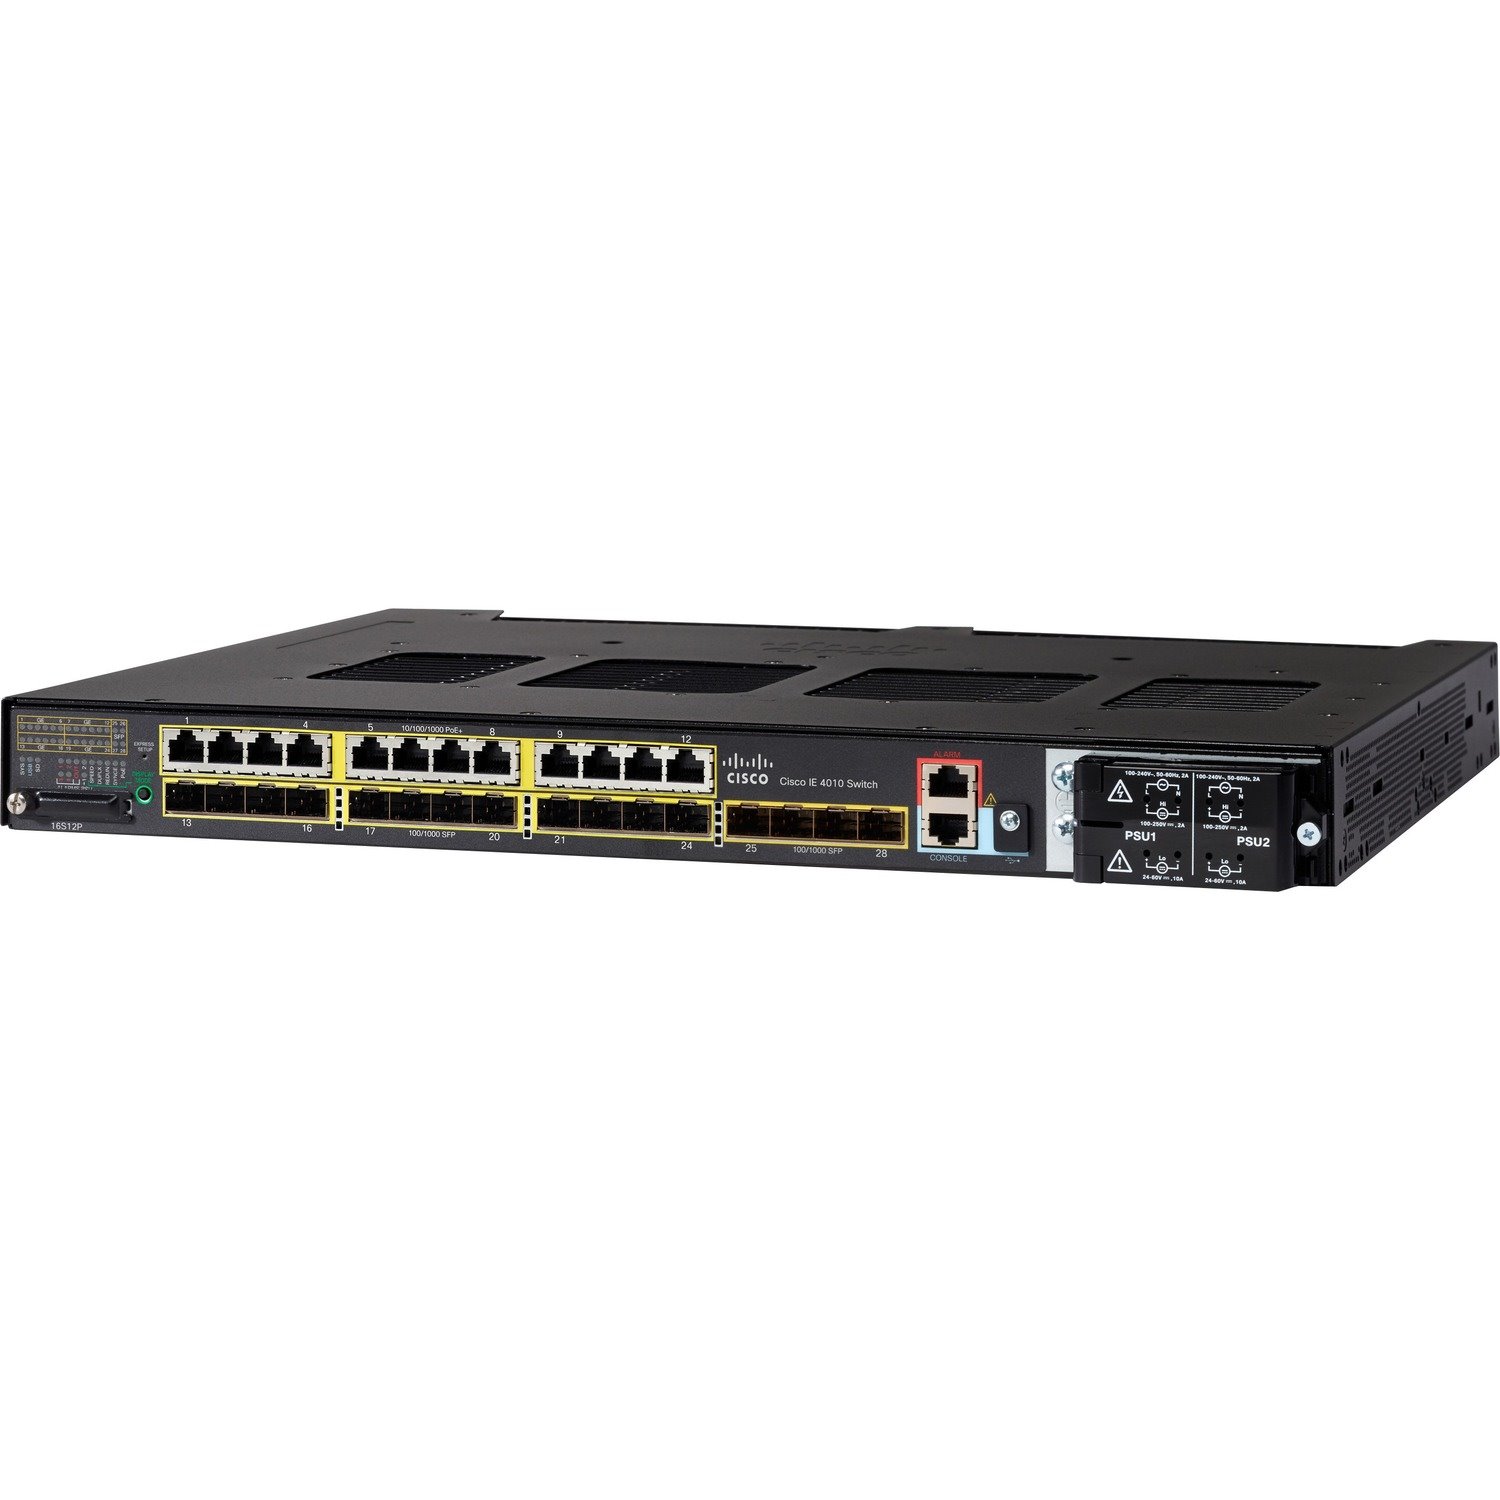 Cisco 4010 IE-4010-16S12P 12 Ports Manageable Ethernet Switch - Gigabit Ethernet - 1000Base-X, 10/100/1000Base-T